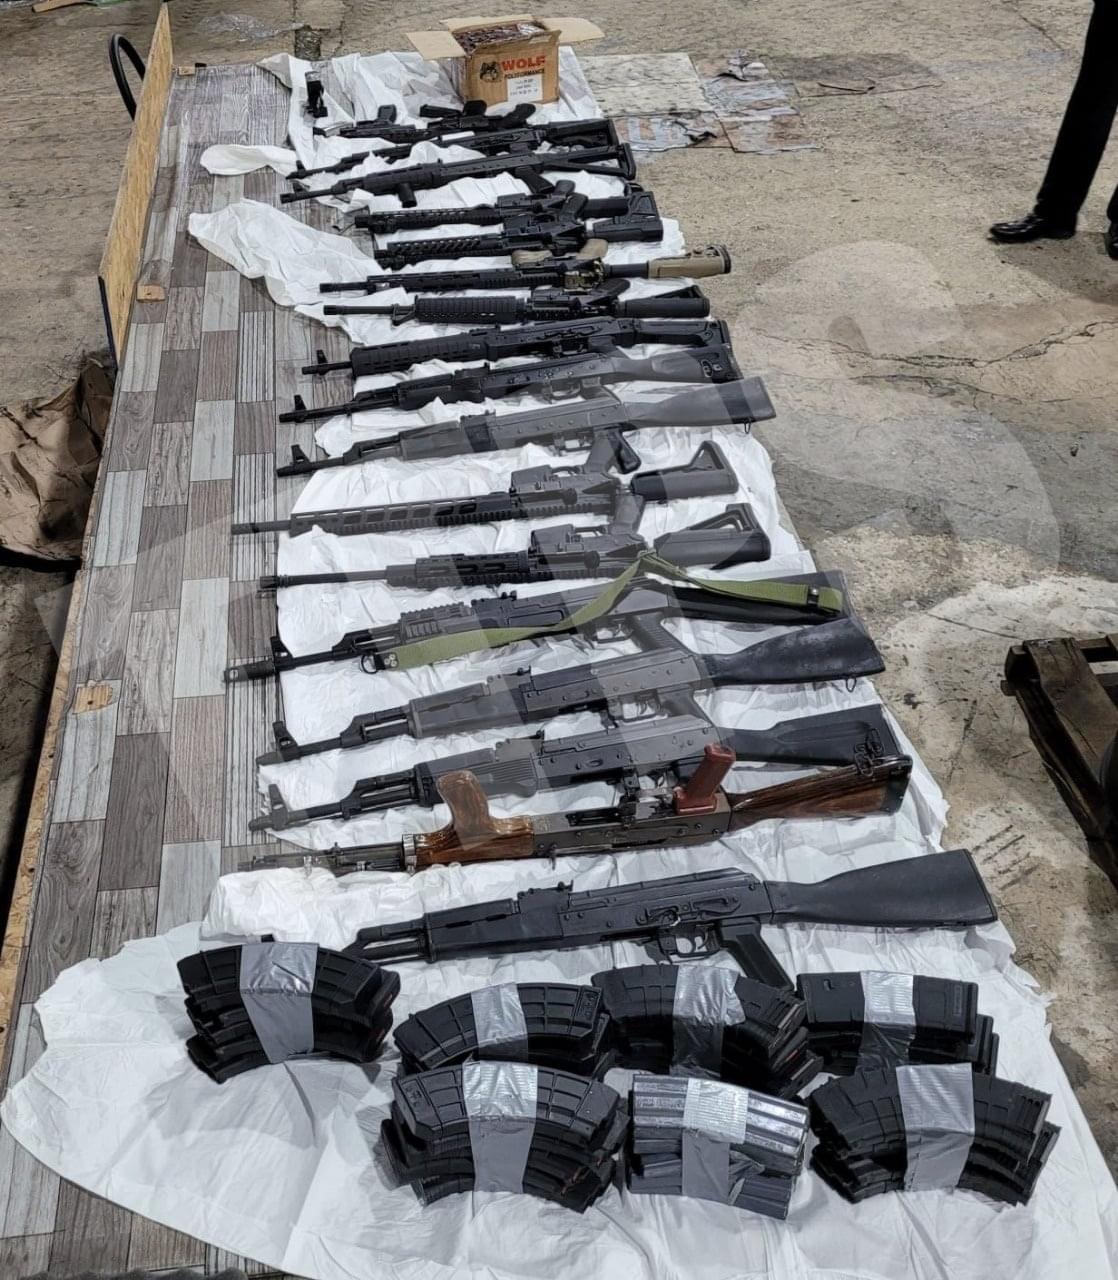 UPDATE: 9 AK-47 rifles and 8 AR-15 rifles found in a barrel in Freeport